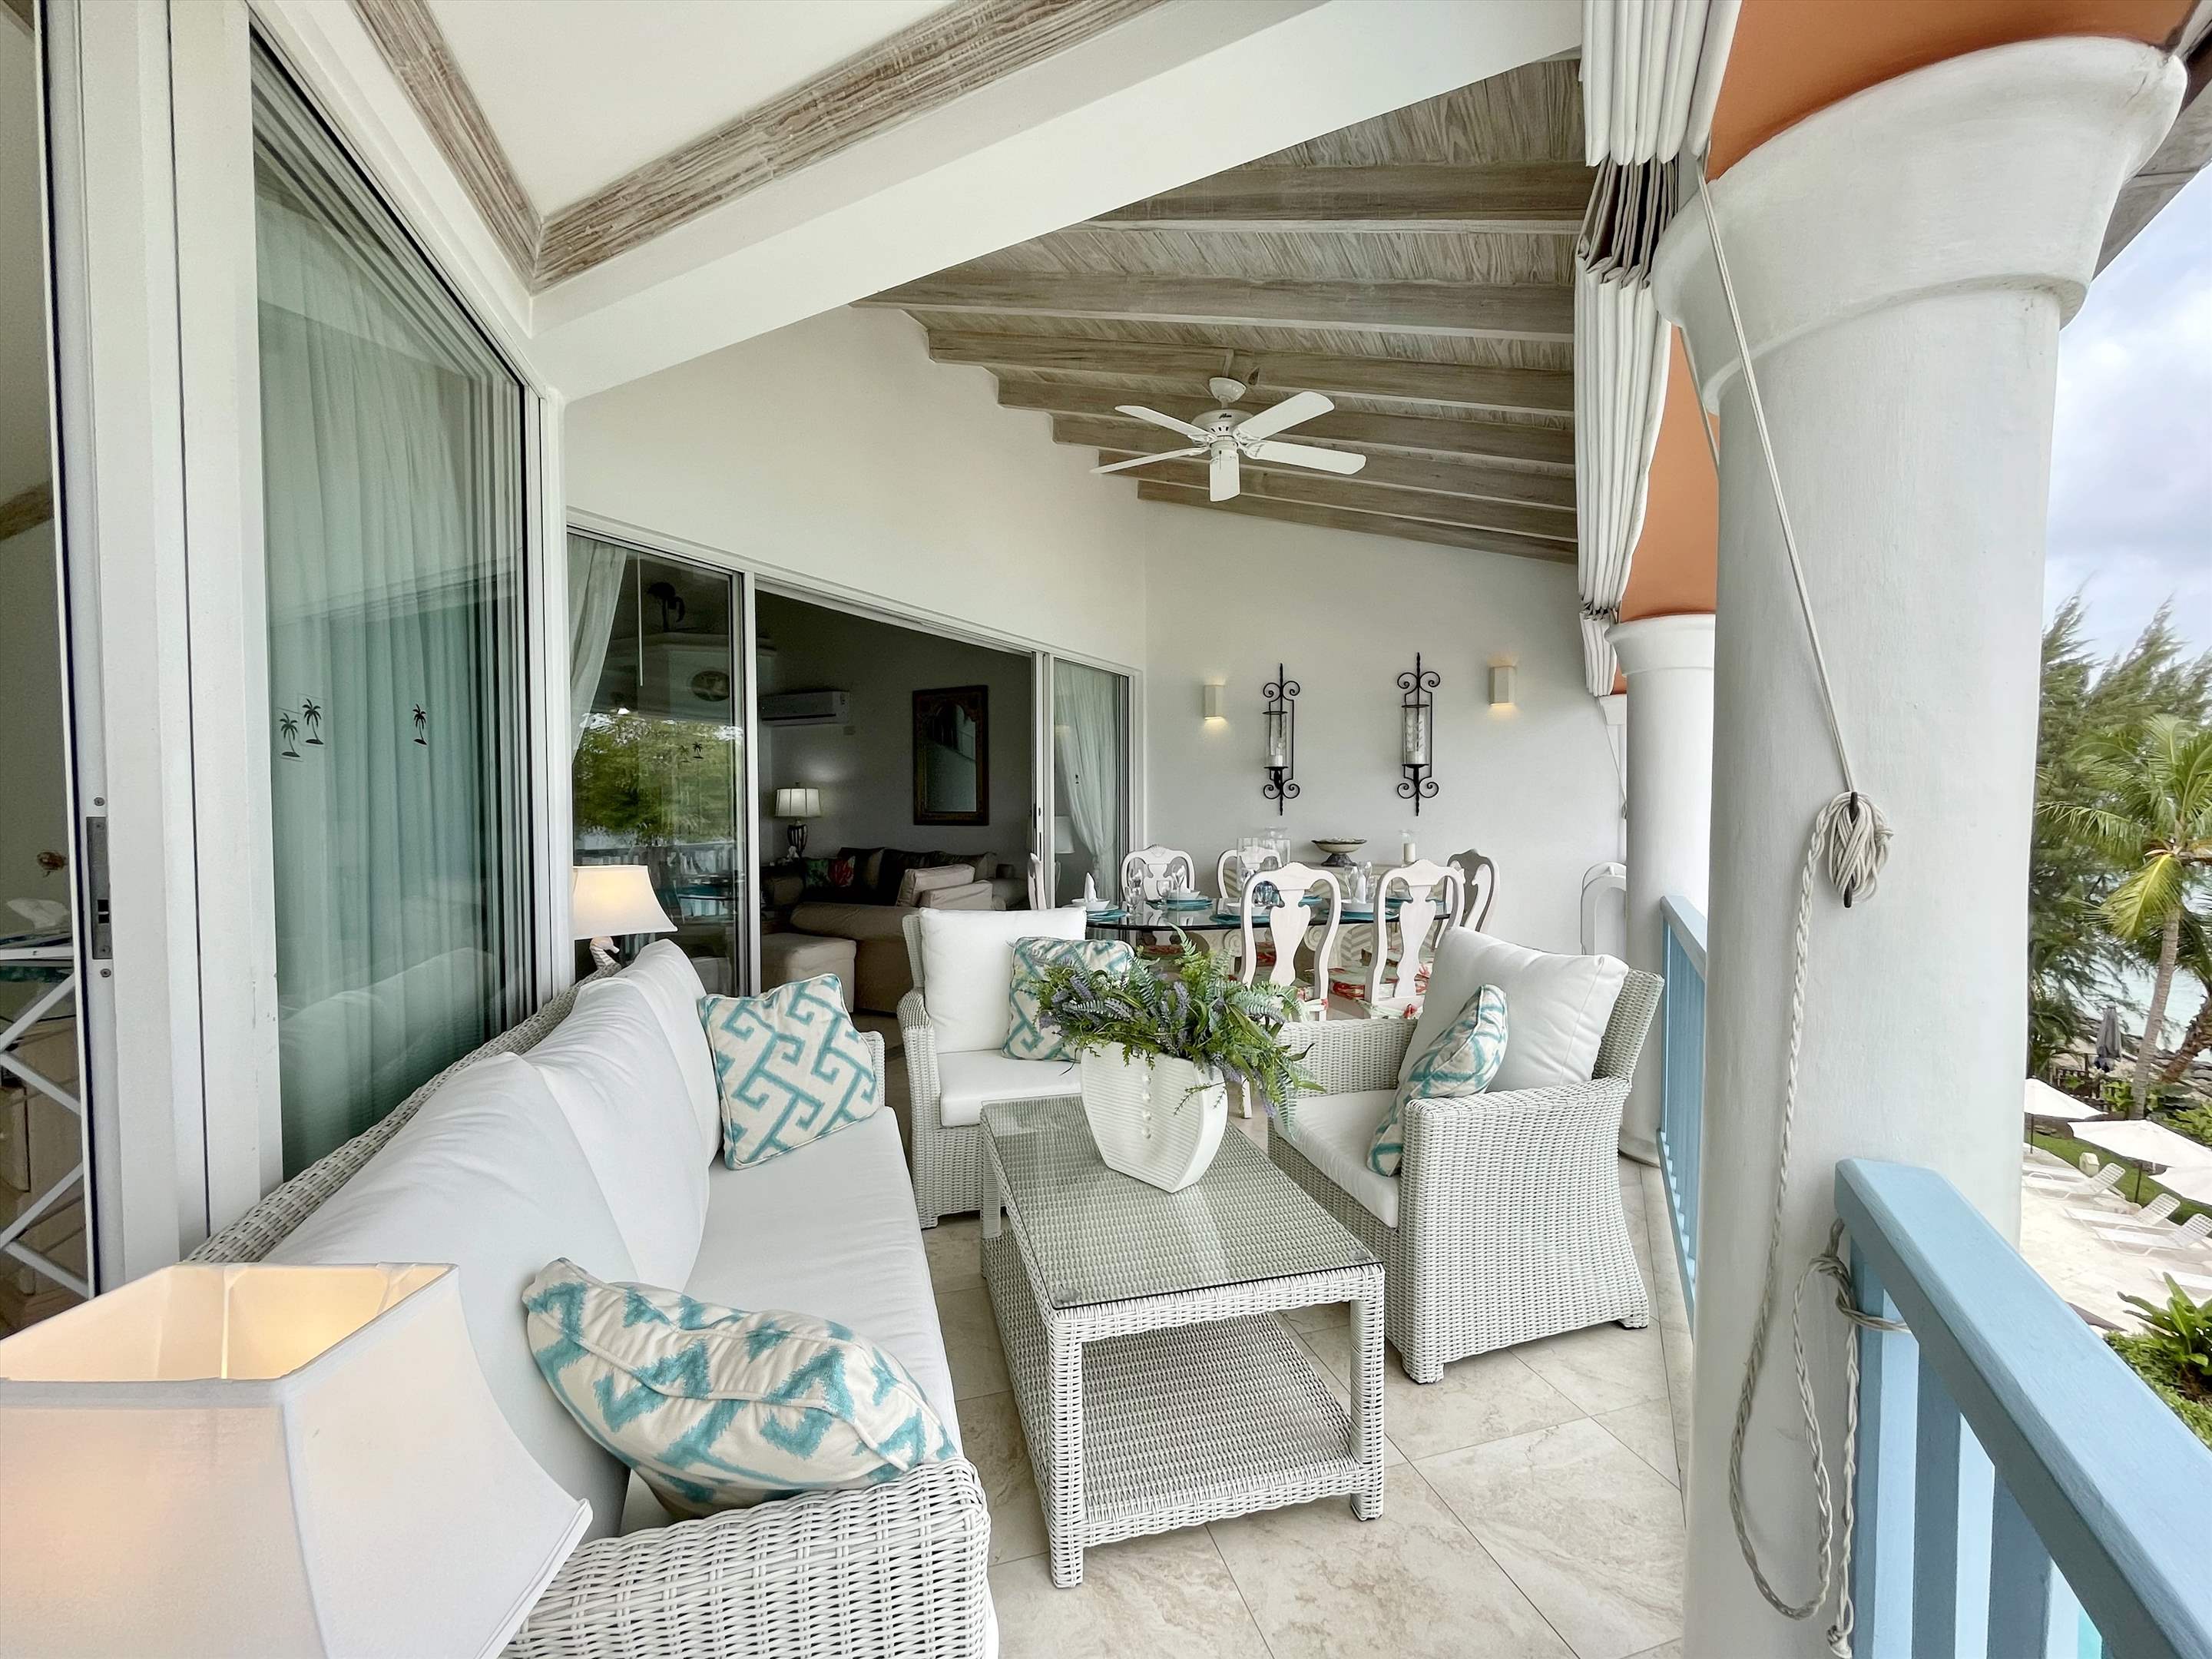 Villas on the Beach 403, 2 bedroom, 2 bedroom apartment in St. James & West Coast, Barbados Photo #2